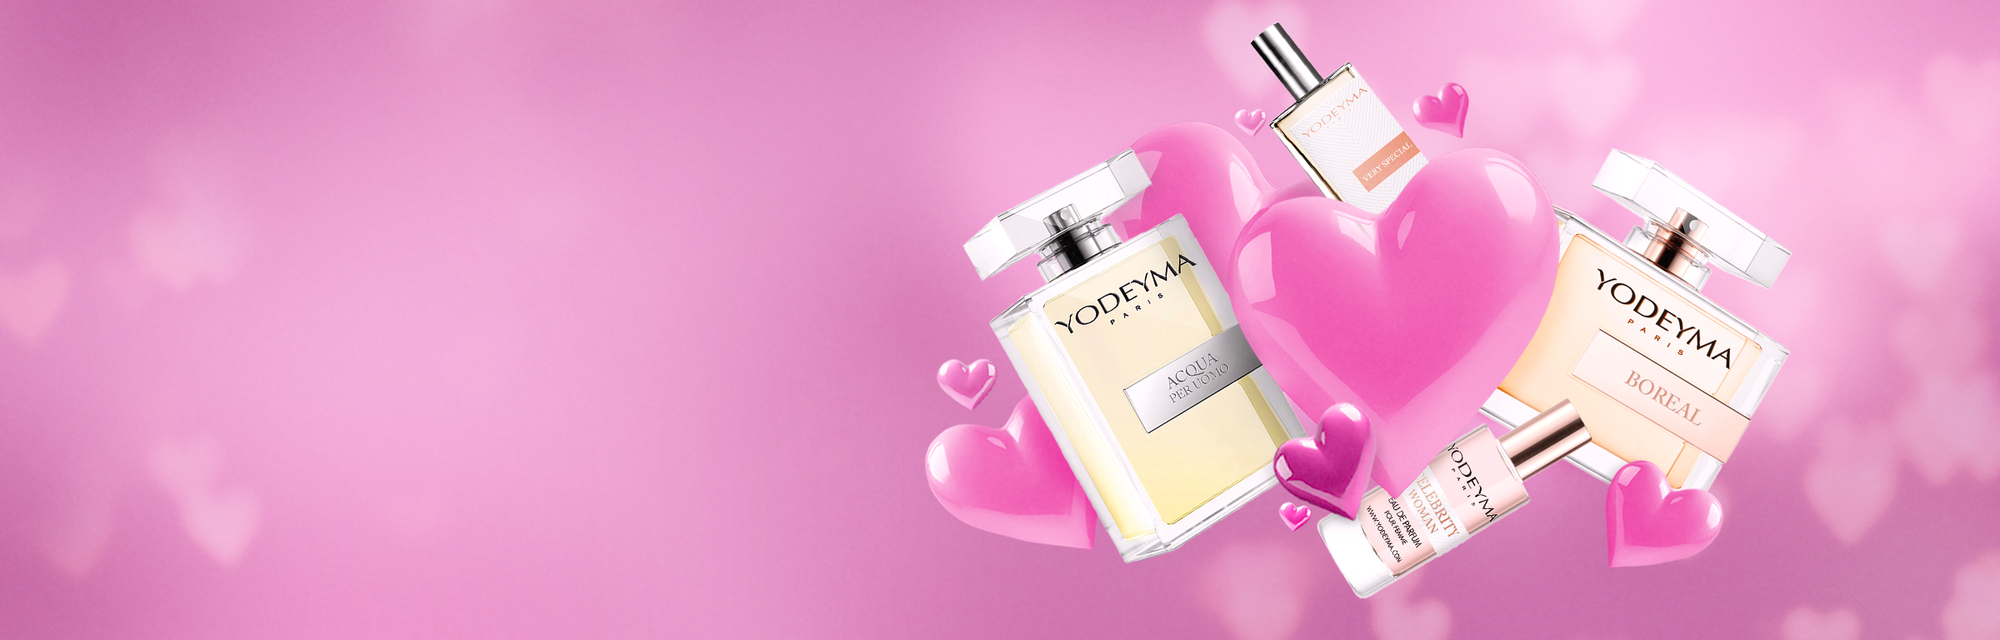 yodema-valentin-banner-parfumcsep